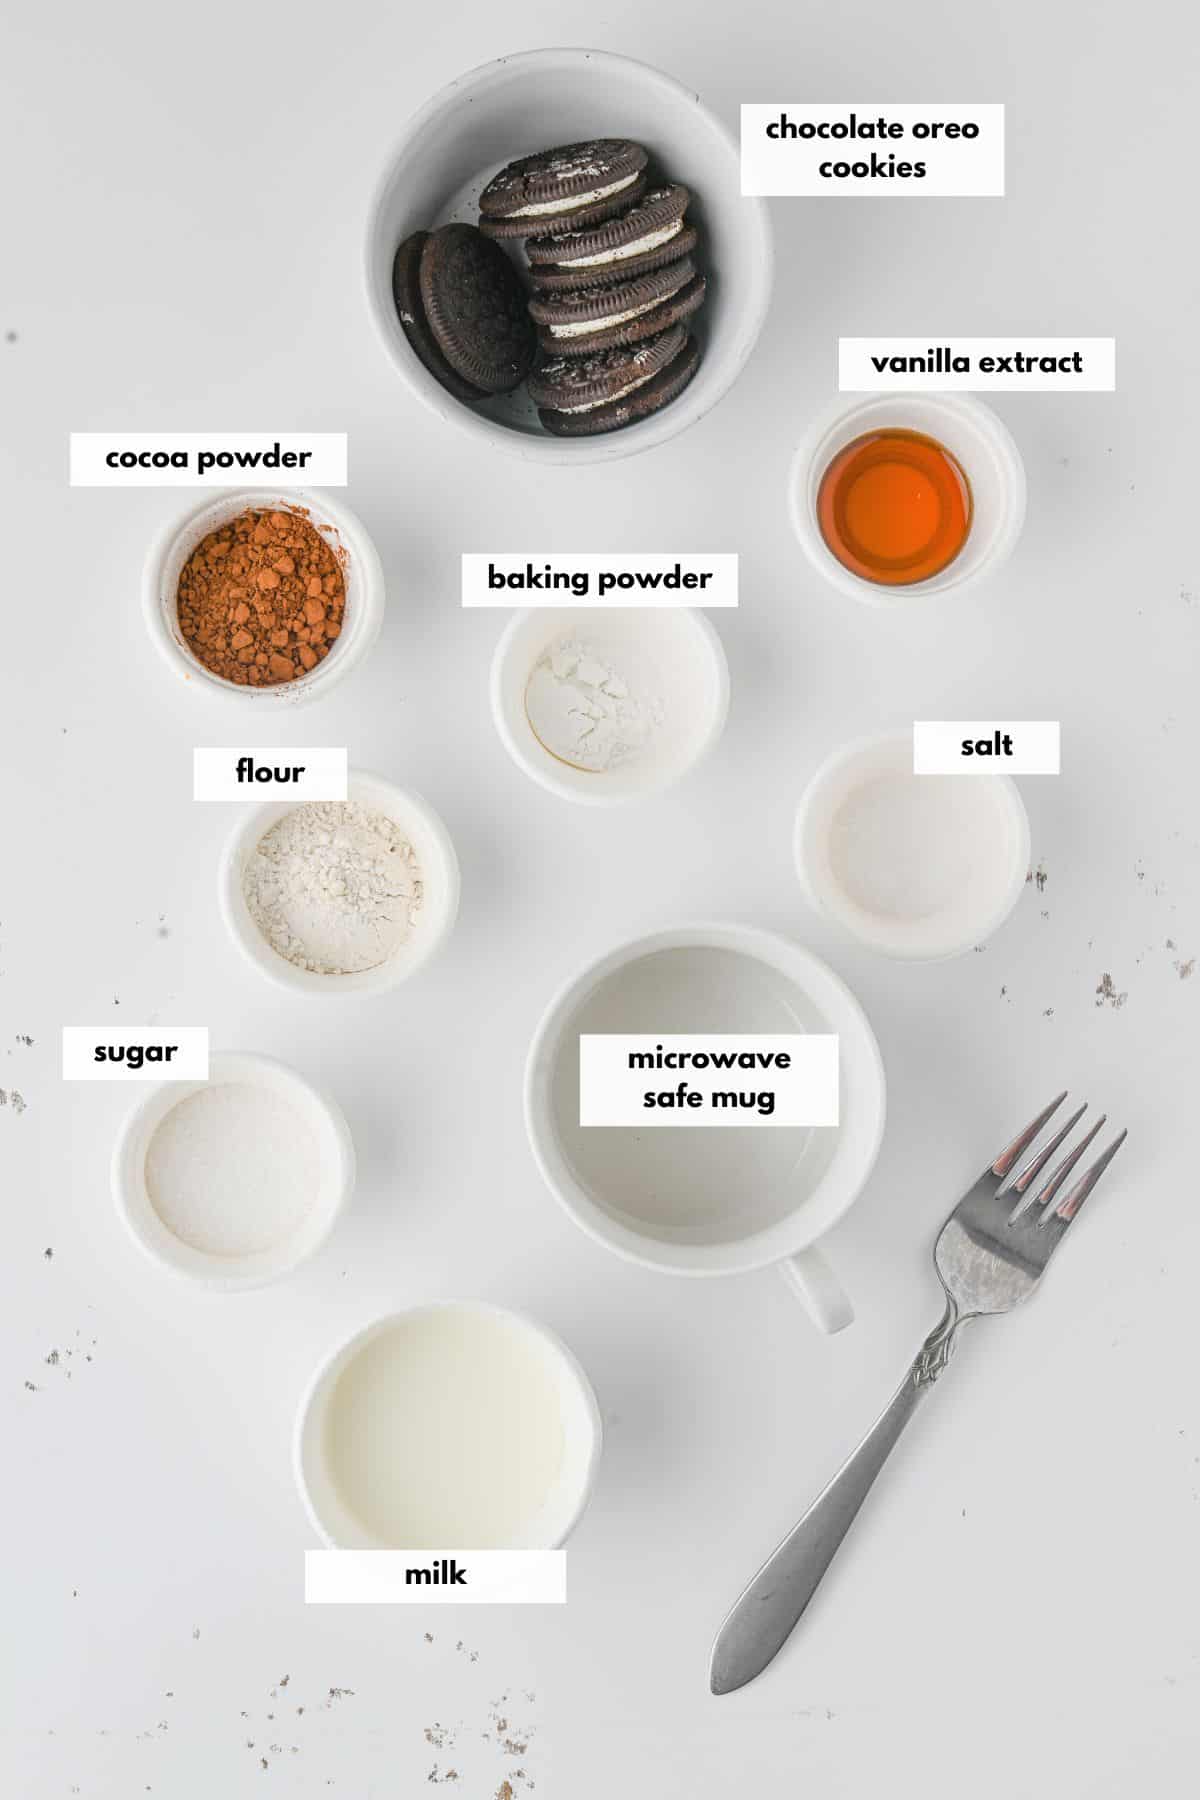 Ingredients to make an oreo mug cake include chocolate cream cookies, cocoa powder, baking powder, salt, sugar, milk and vanilla.